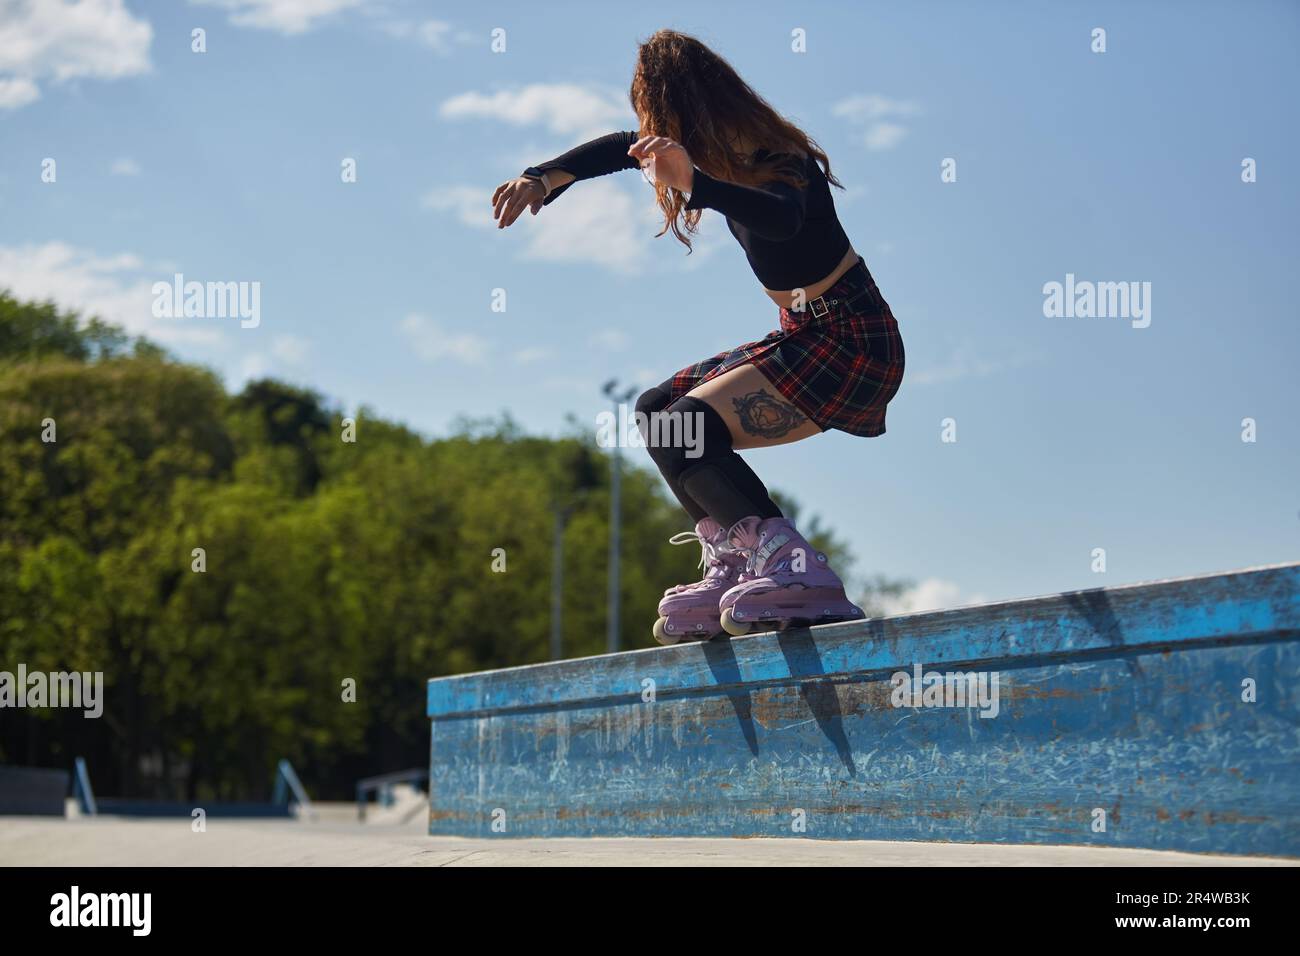 https://c8.alamy.com/comp/2R4WB3K/young-roller-blader-grinding-on-a-ledge-in-a-skatepark-cool-female-skater-wearing-modern-aggressive-skates-performing-a-backside-full-torque-grind-ou-2R4WB3K.jpg